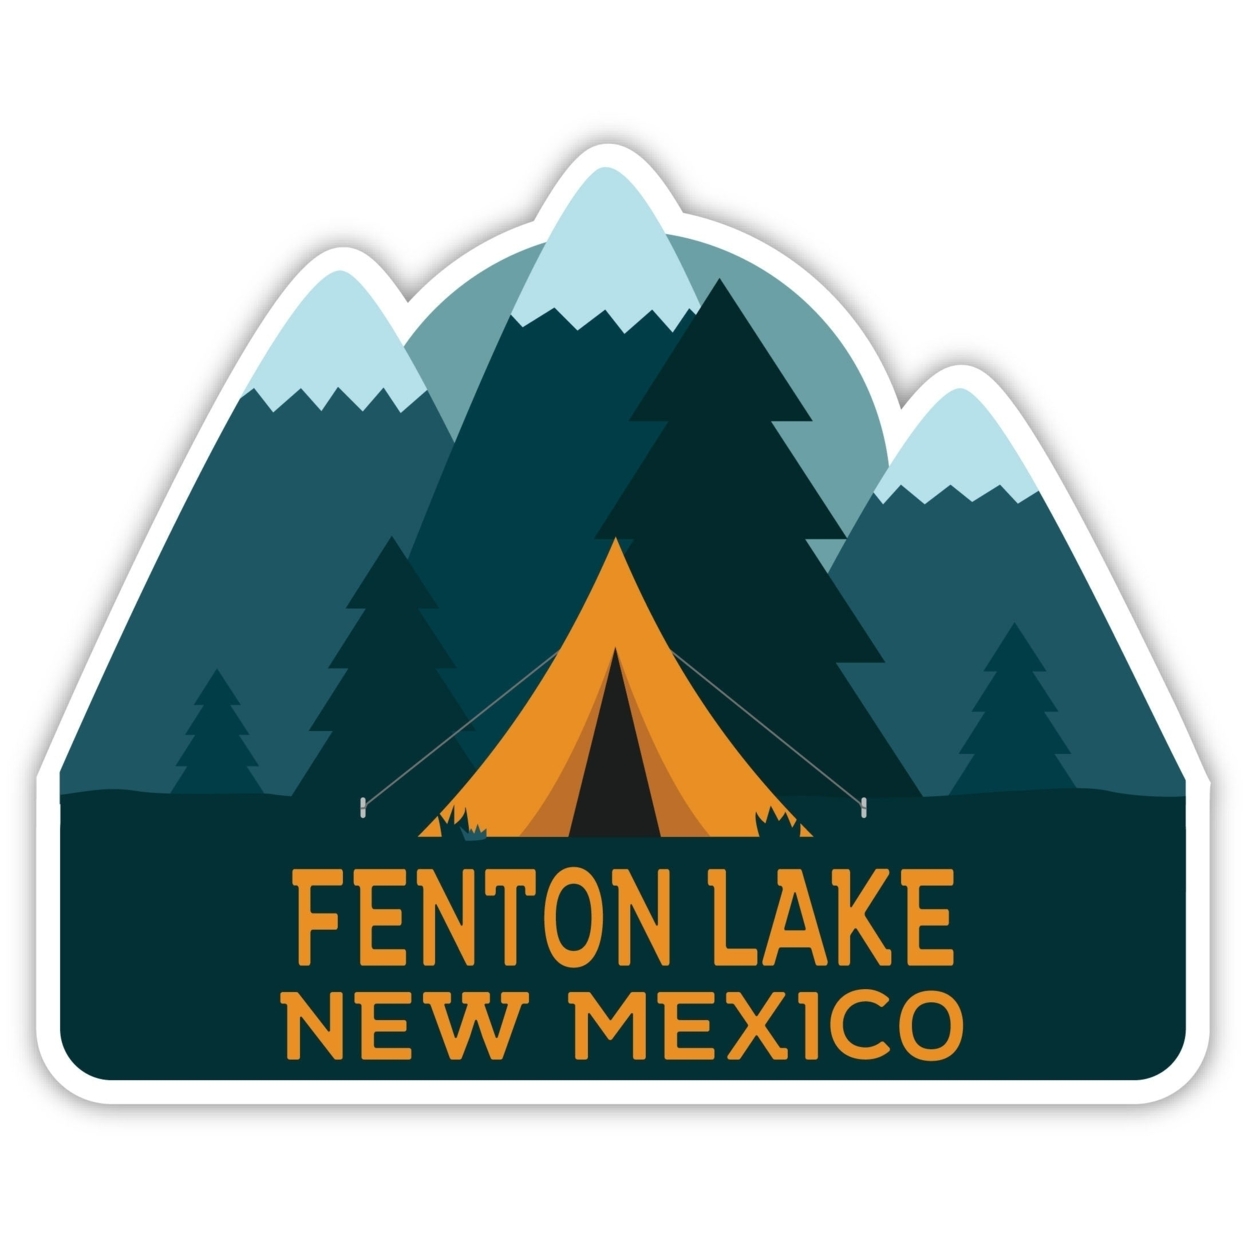 Fenton Lake New Mexico Souvenir Decorative Stickers (Choose Theme And Size) - Single Unit, 8-Inch, Tent